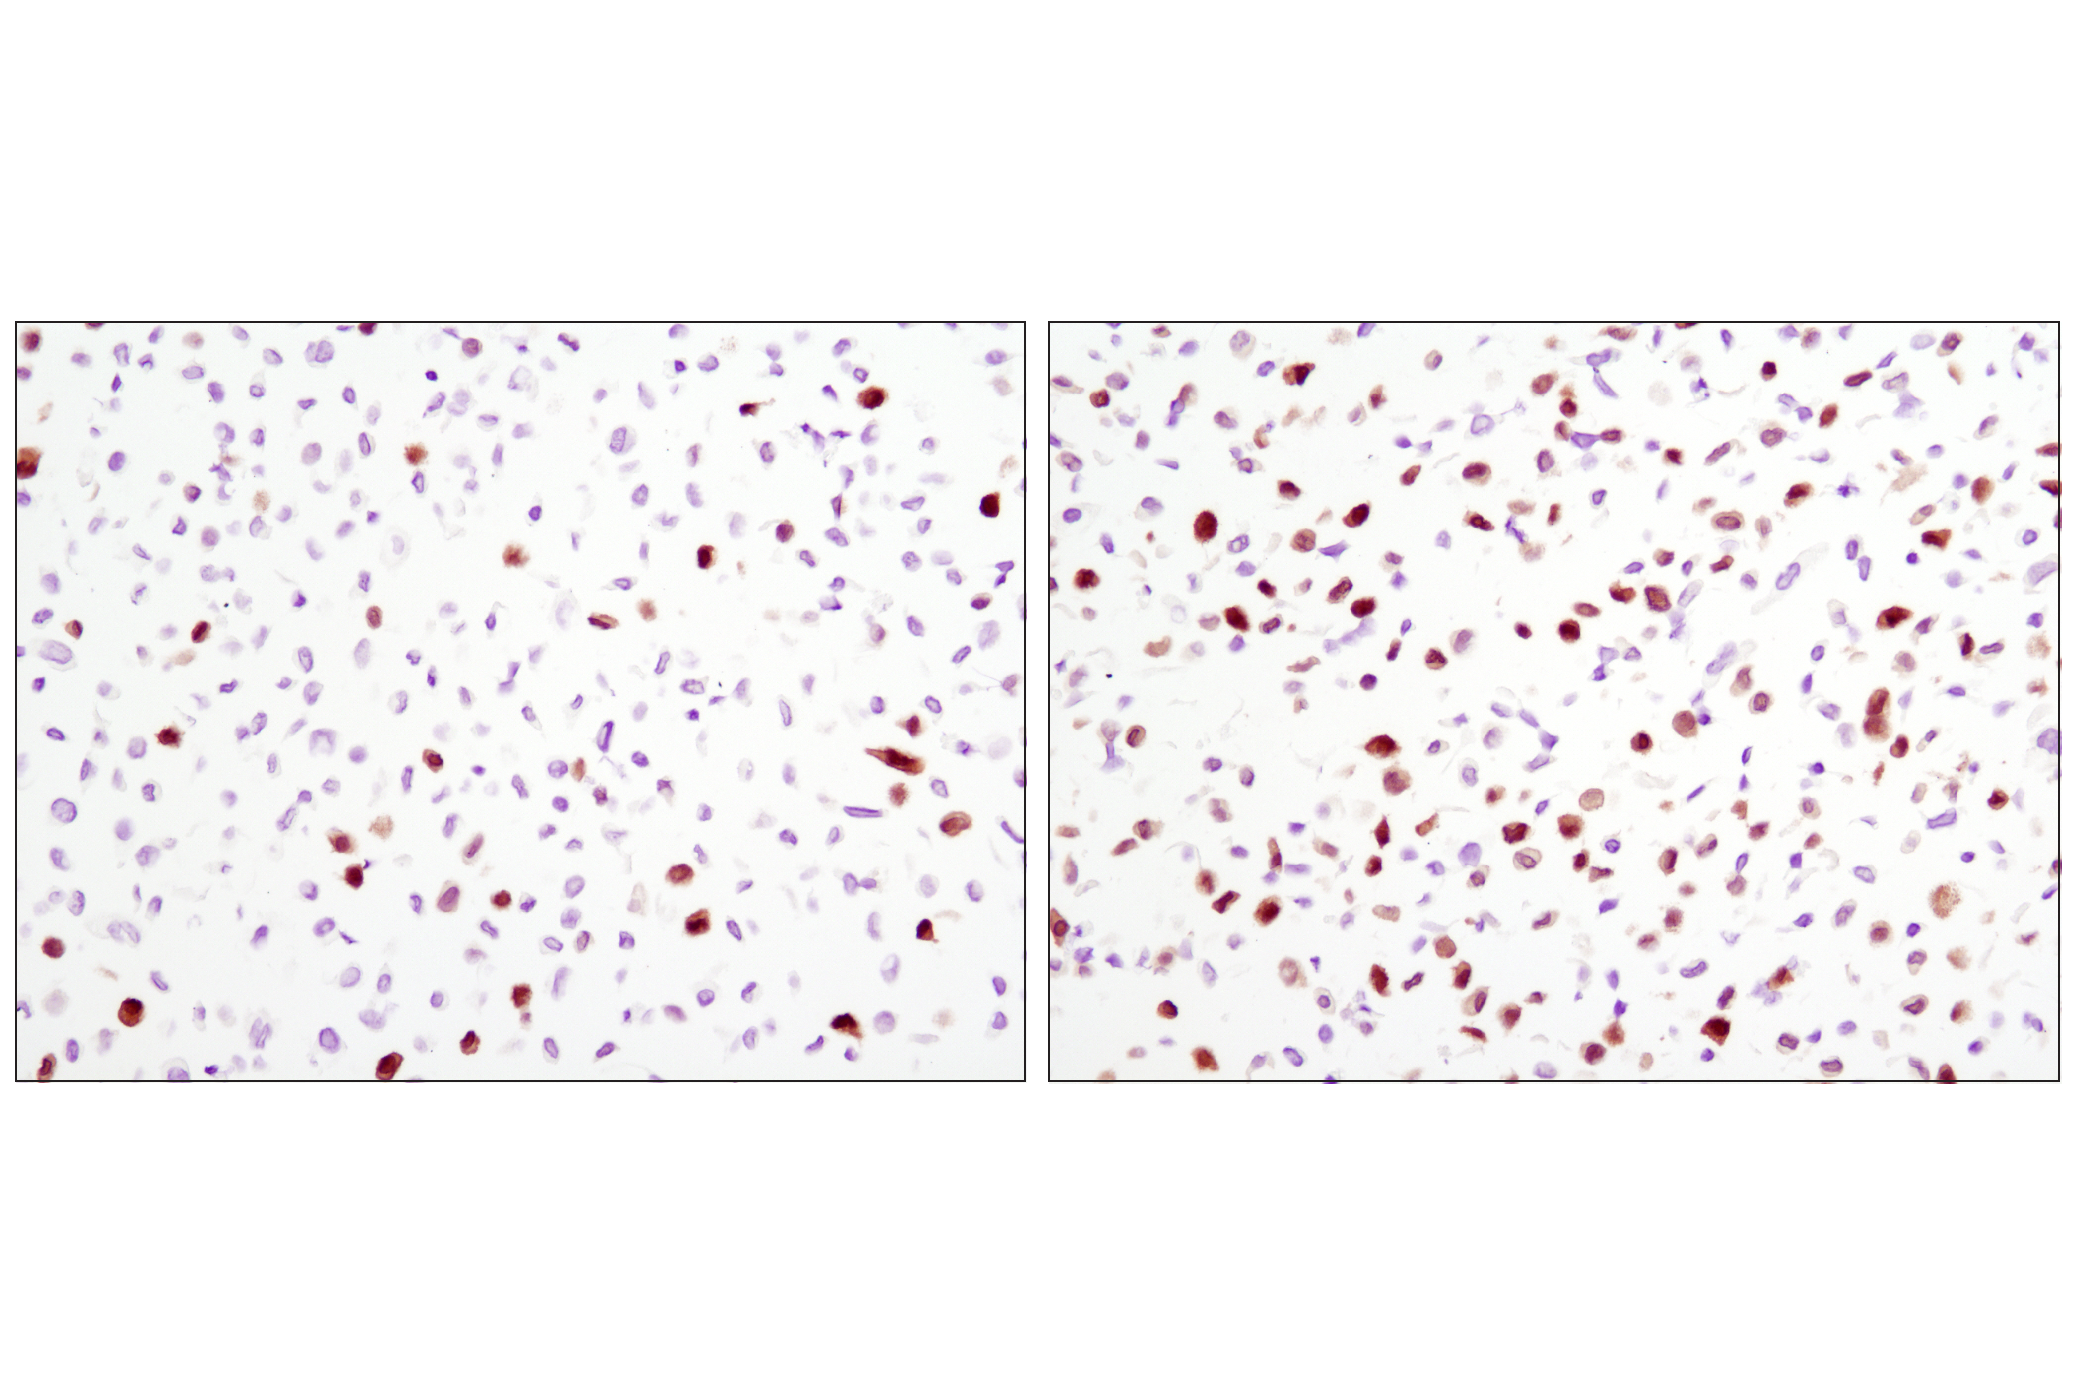  Image 11: PhosphoPlus® p44/42 MAPK (Erk1/2) (Thr202/Tyr204) Antibody Duet